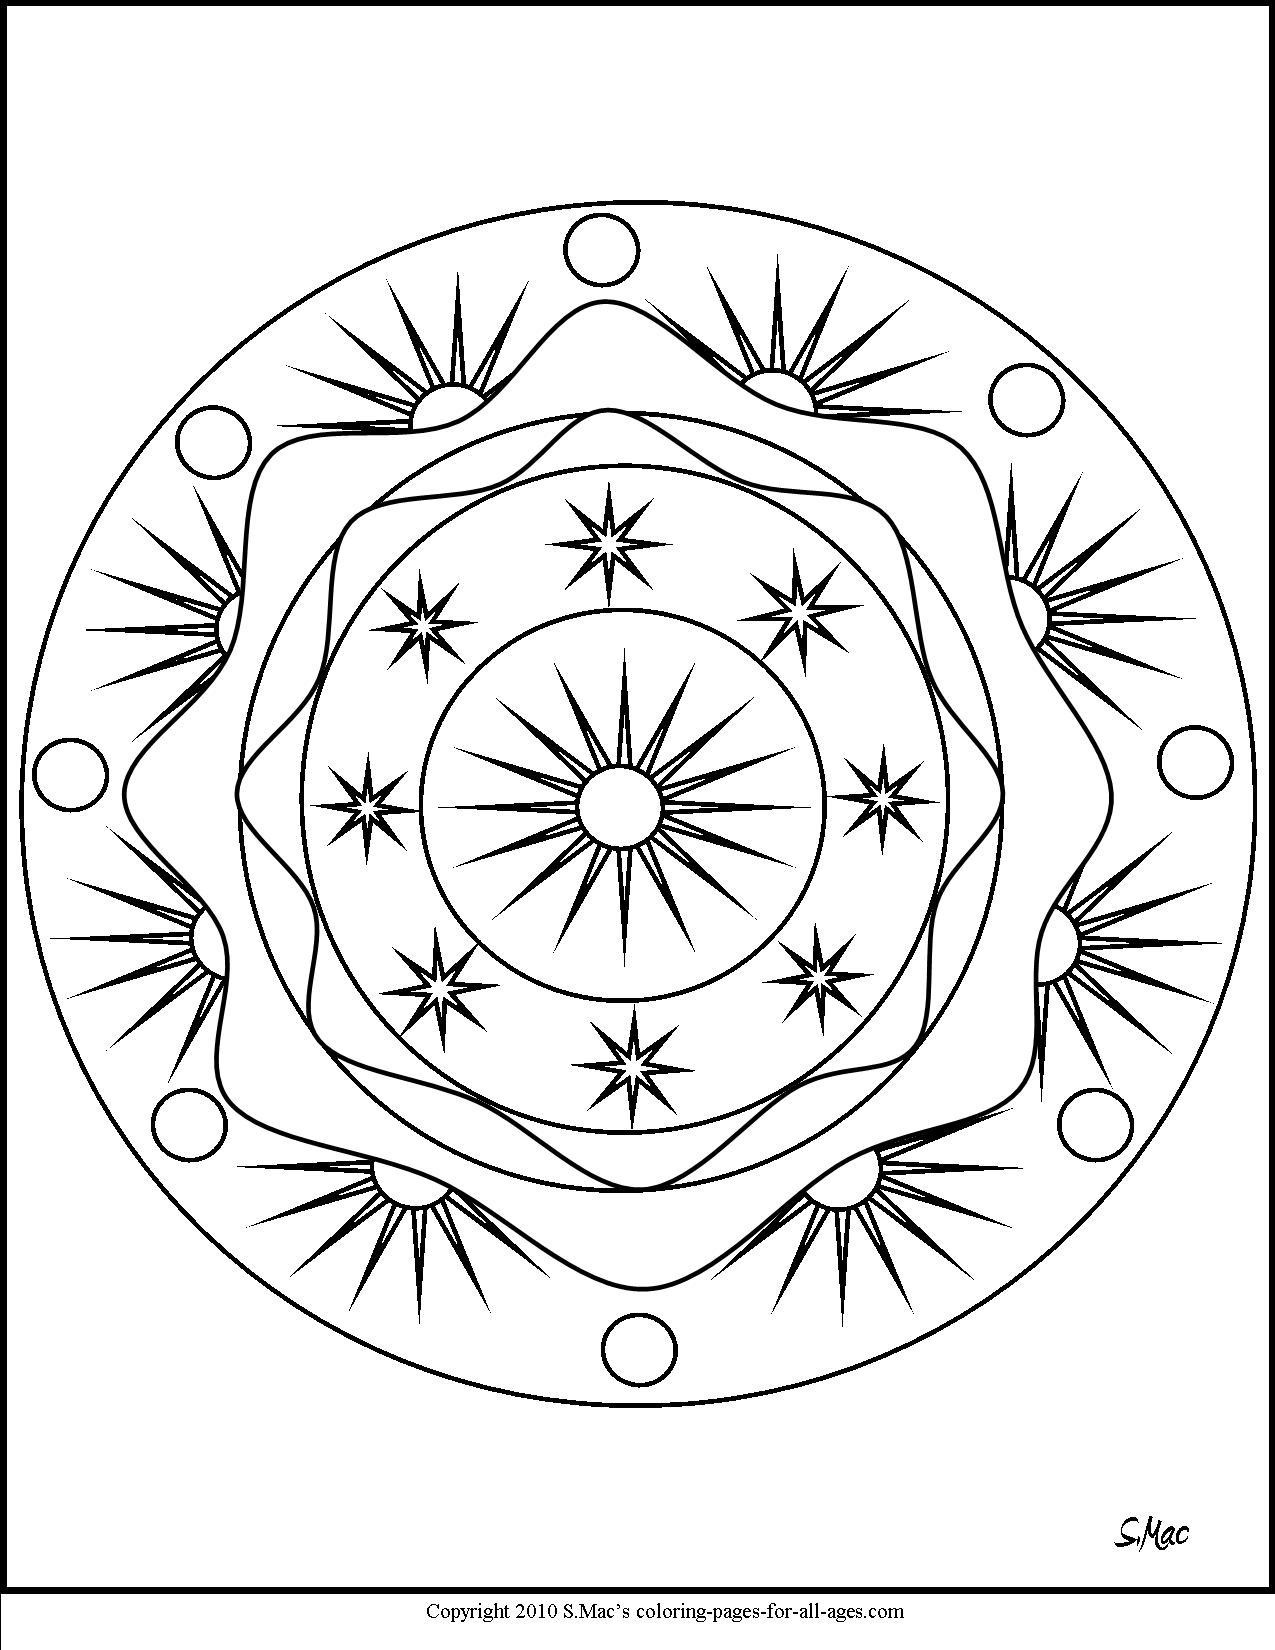 Moon Mandala Coloring Pages at GetDrawings | Free download